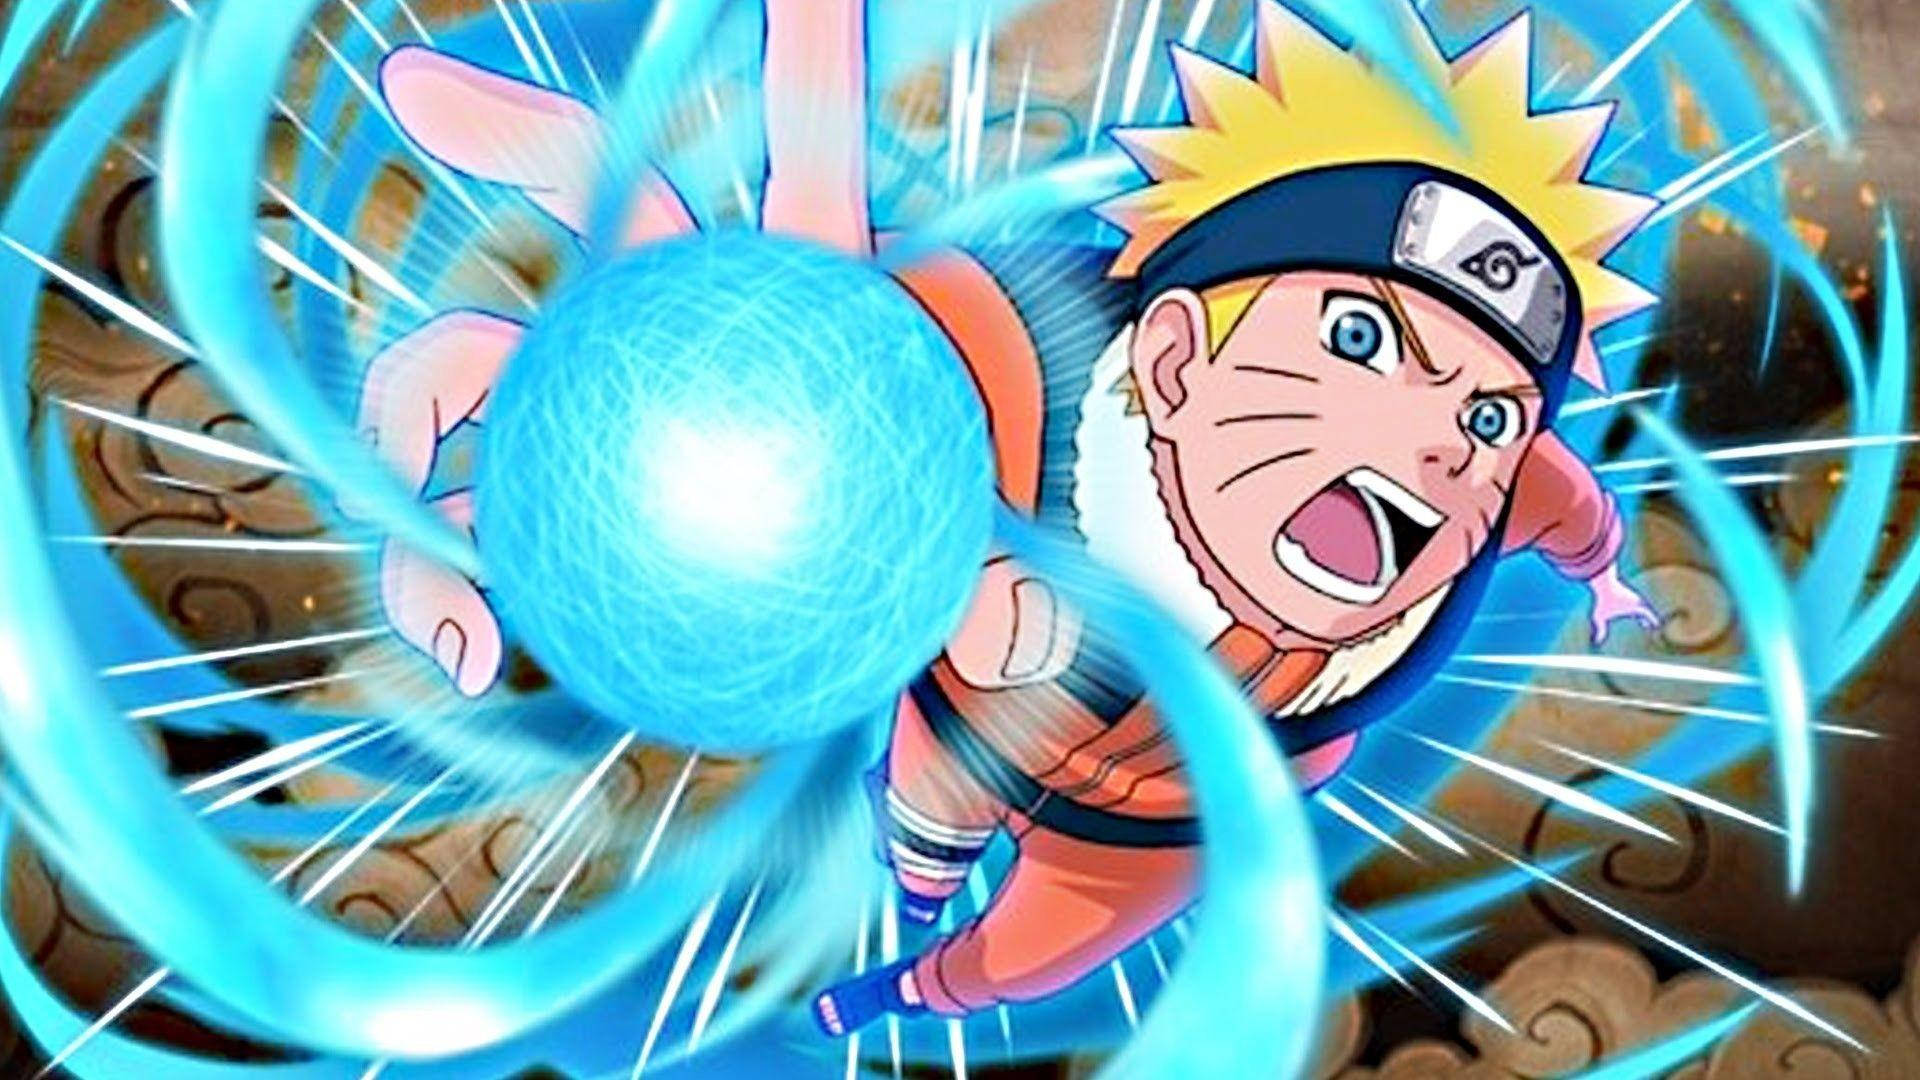 Naruto Raising Hand Rasengan Attack